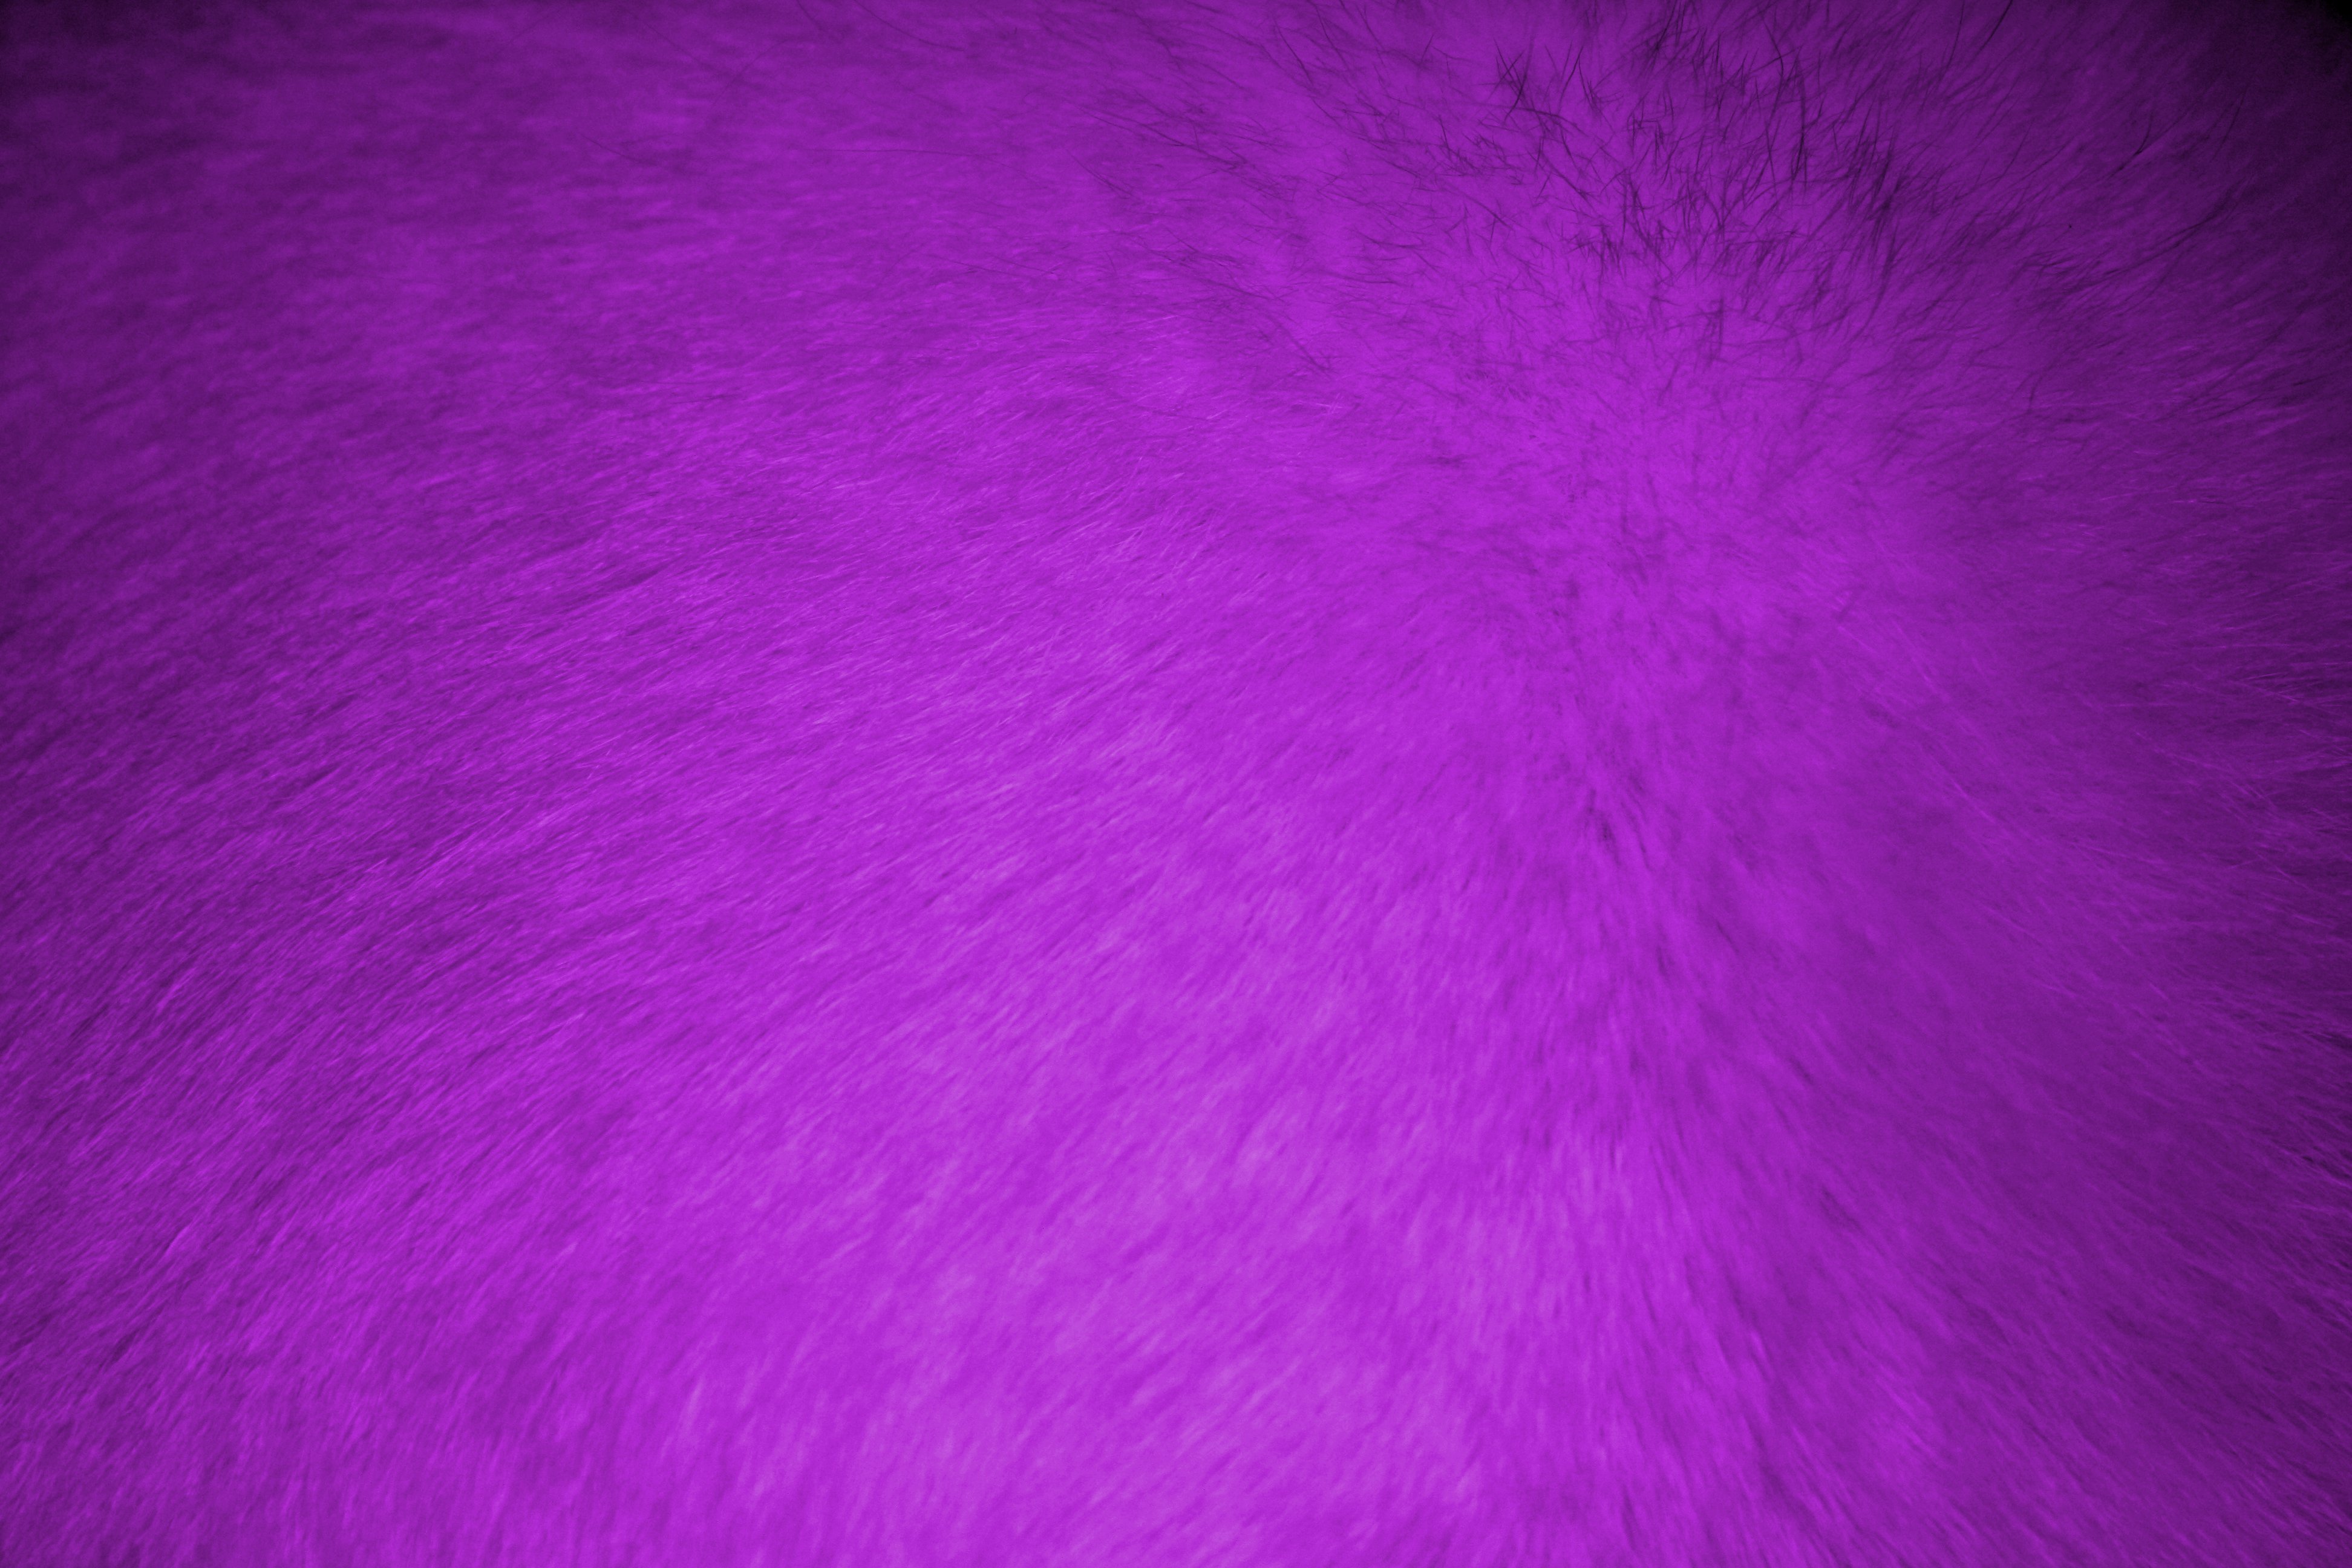 Purple Fur Texture   Free High Resolution Photo   Dimensions 3888